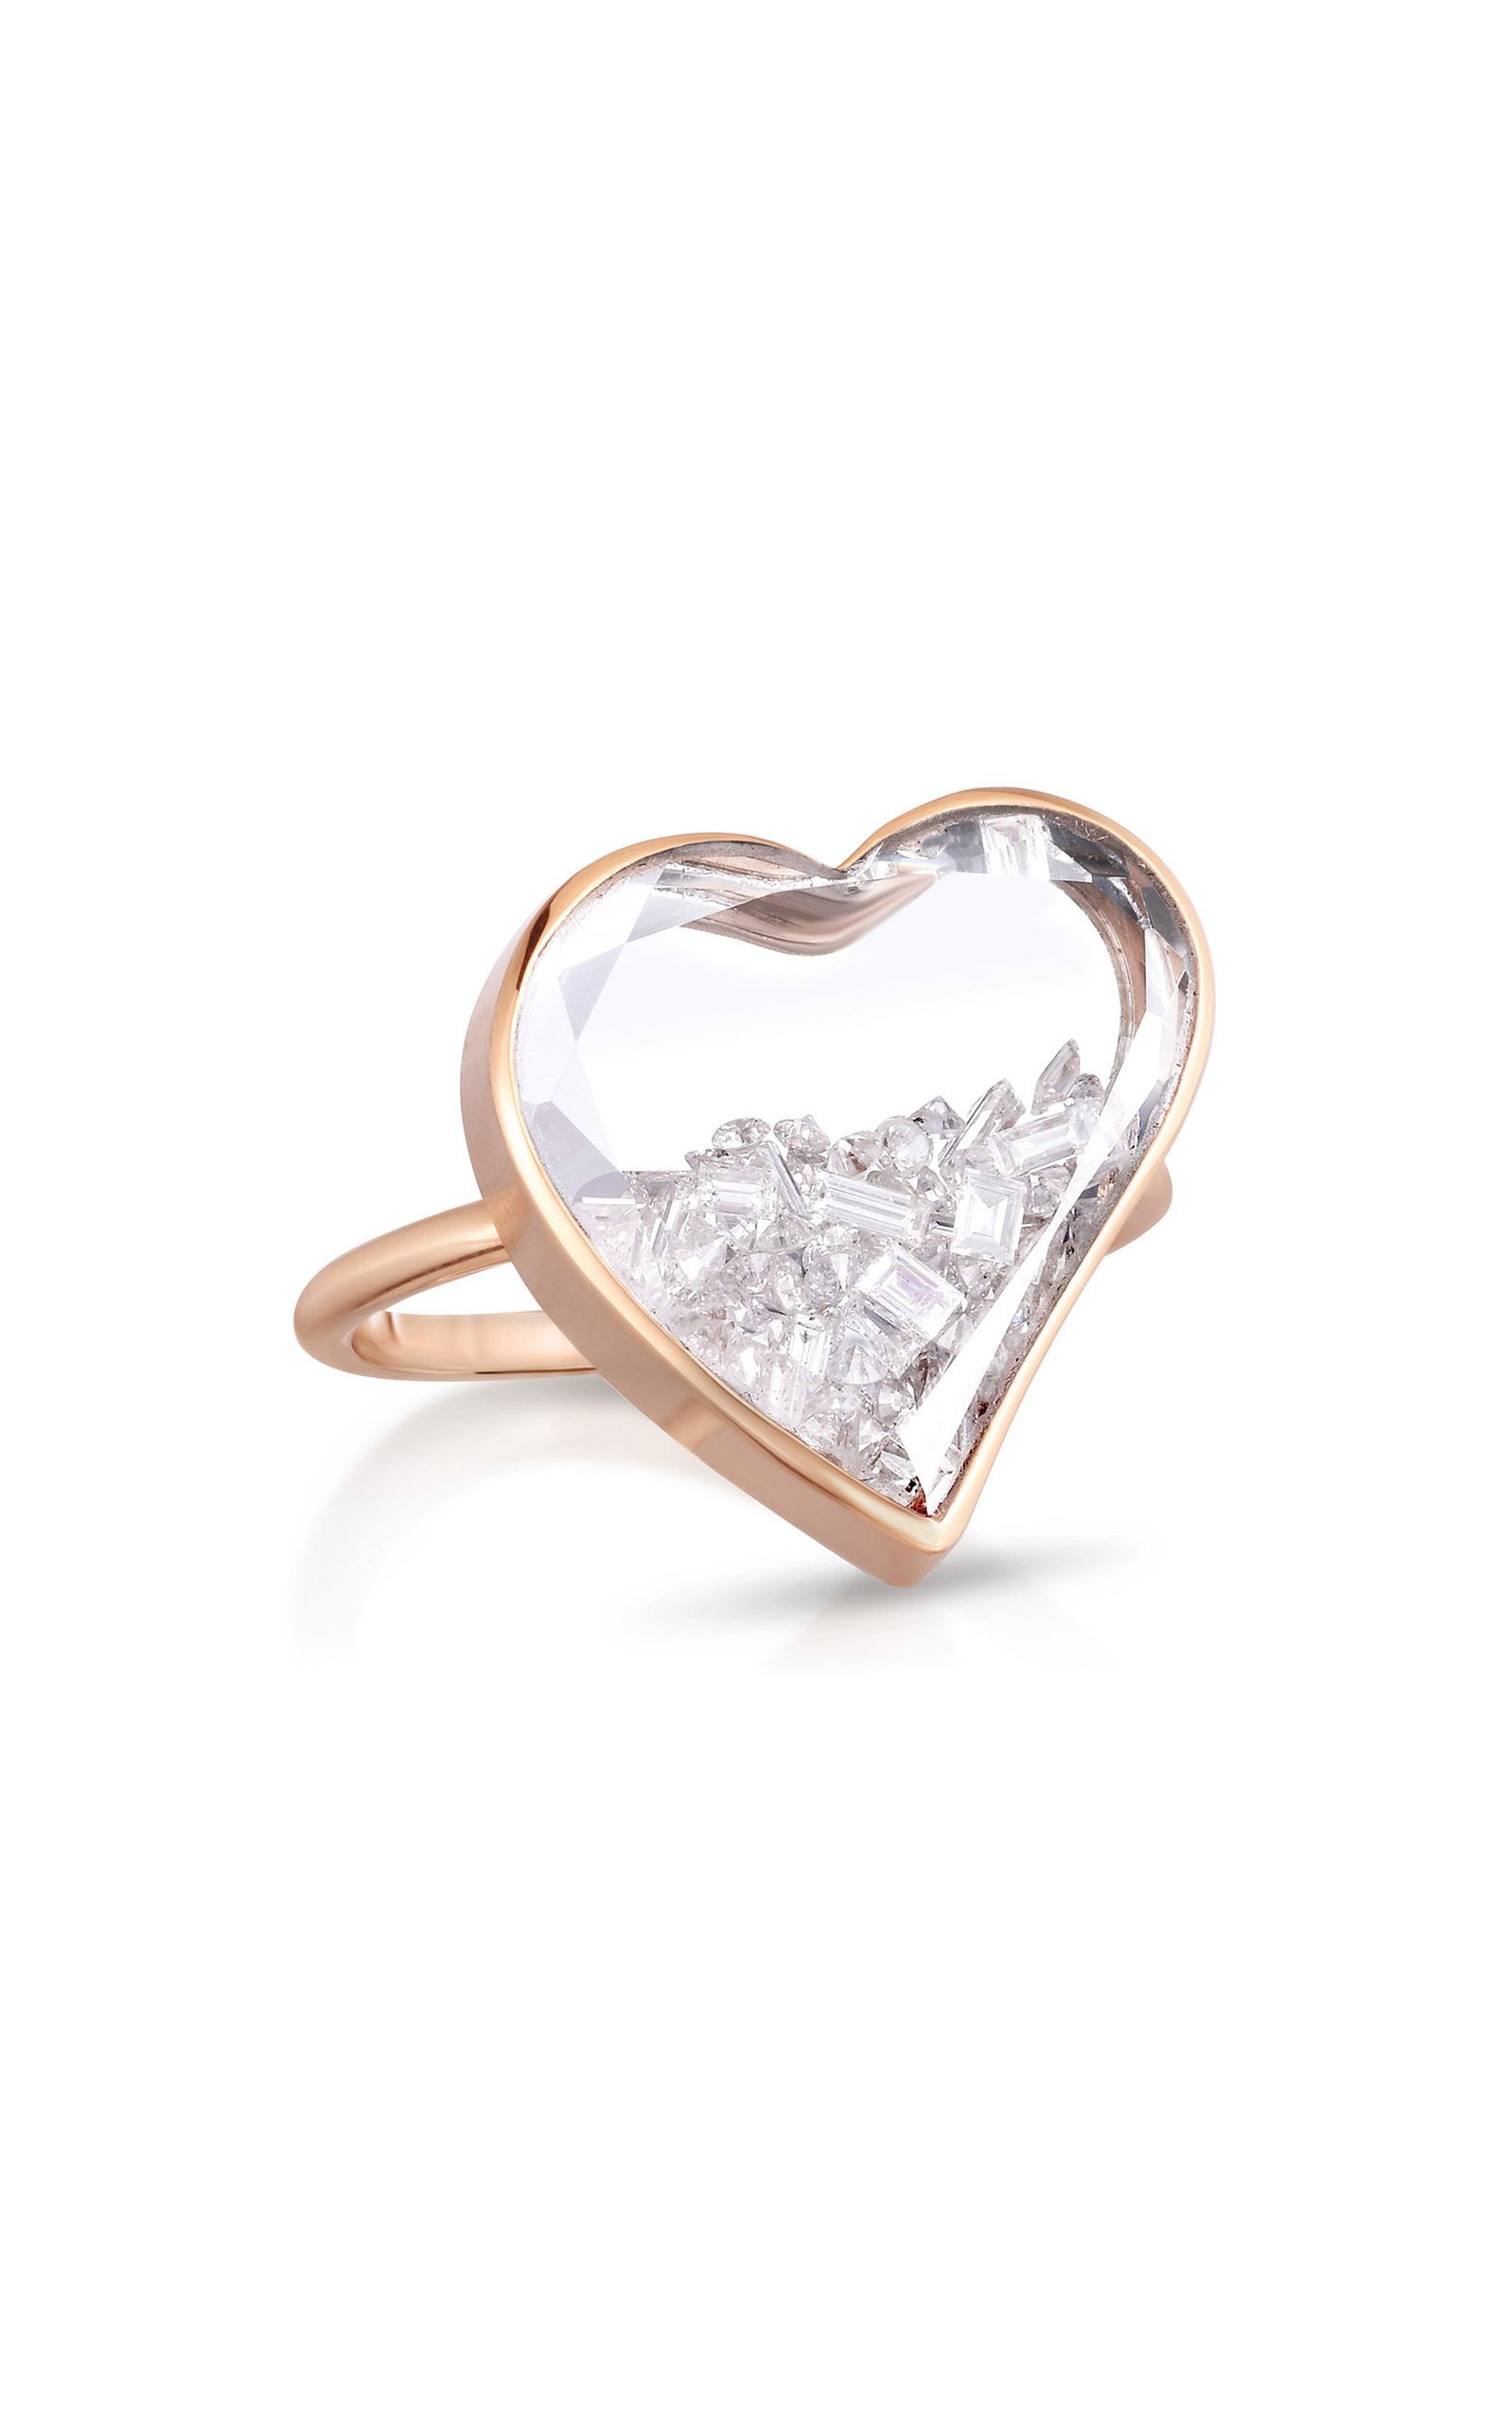 Moritz Glik - Afago 18K Yellow Gold Diamond Ring - Gold - US 7 - Moda Operandi - Gifts For Her | Moda Operandi (Global)